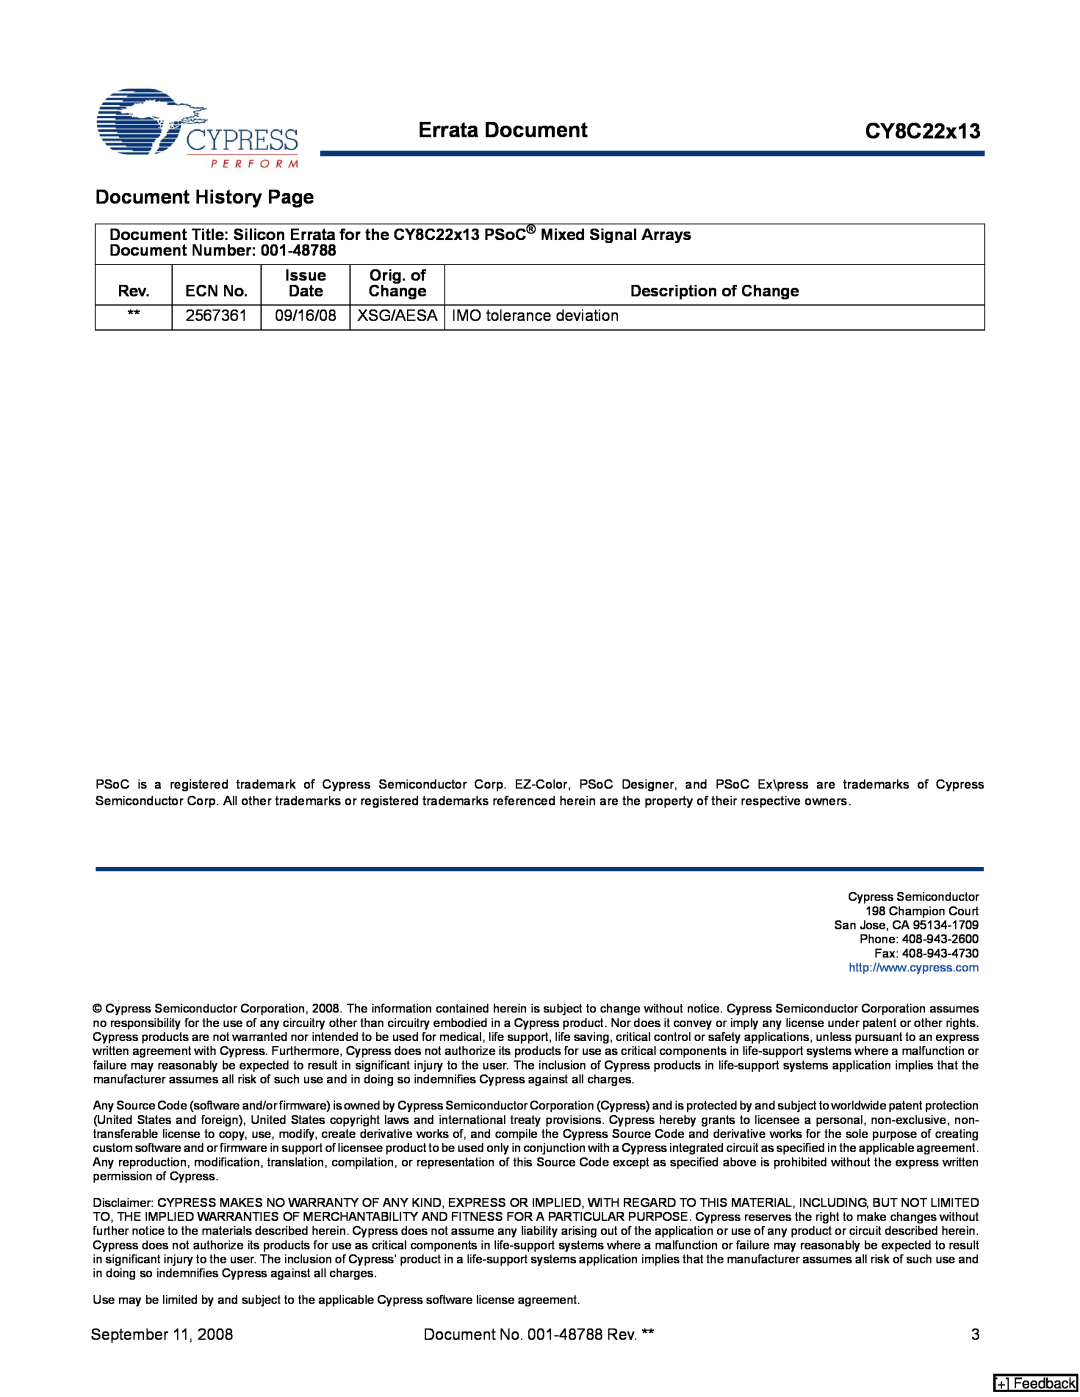 Cypress CY8C22x13 manual Document History Page, Errata Document 